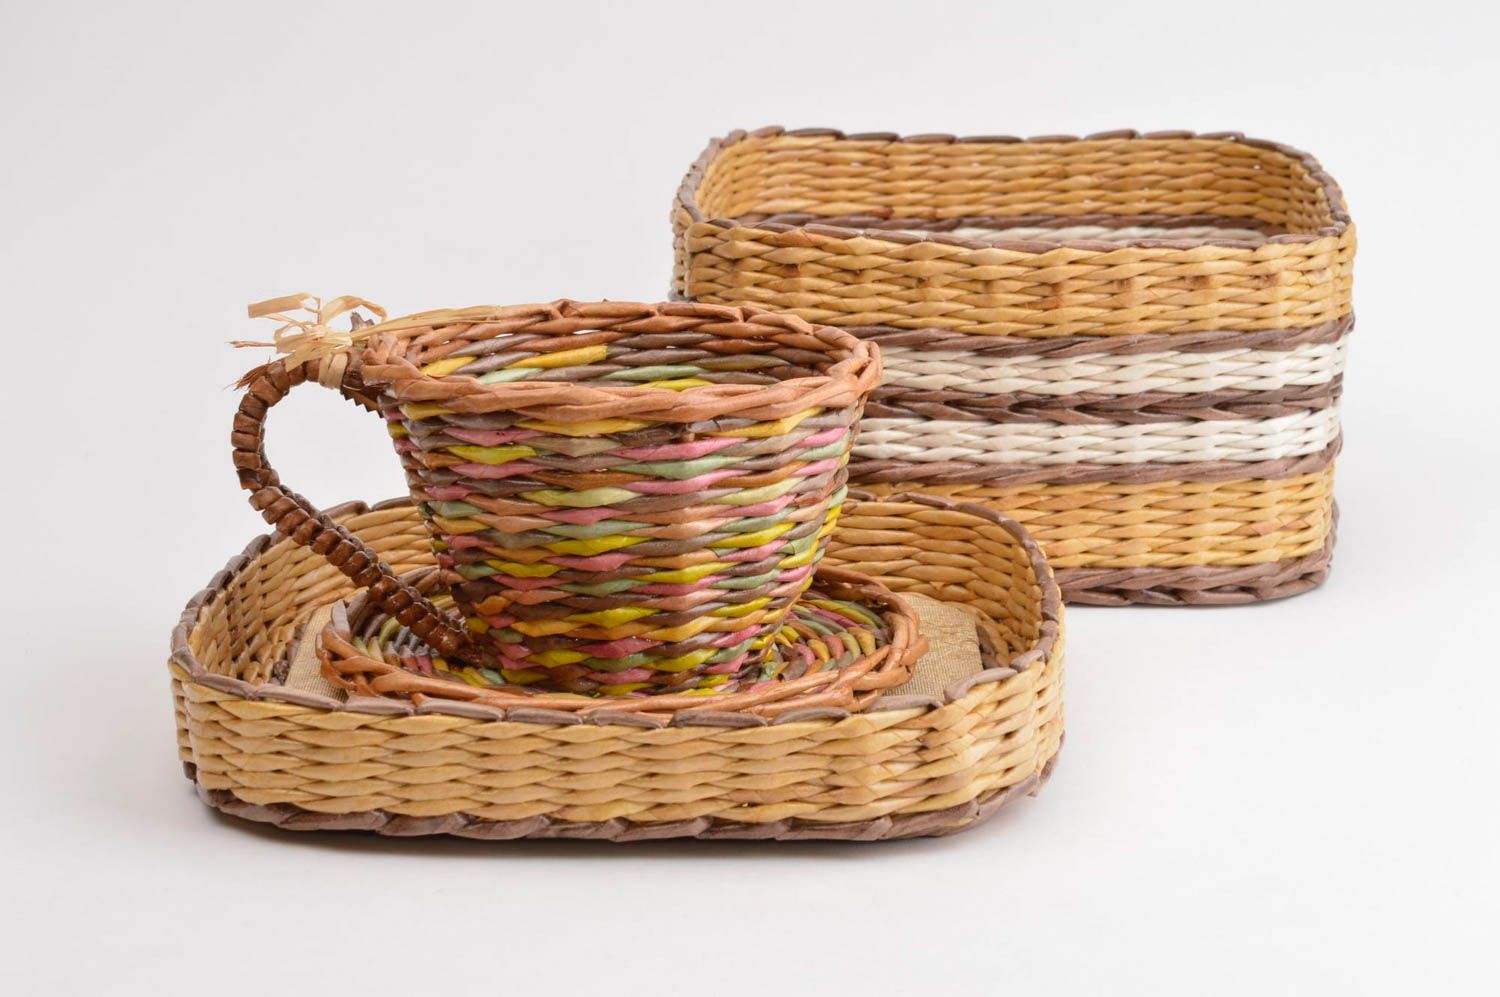 Handmade wicker basket unusual gift interior decor ideas wicker box gift ideas photo 4